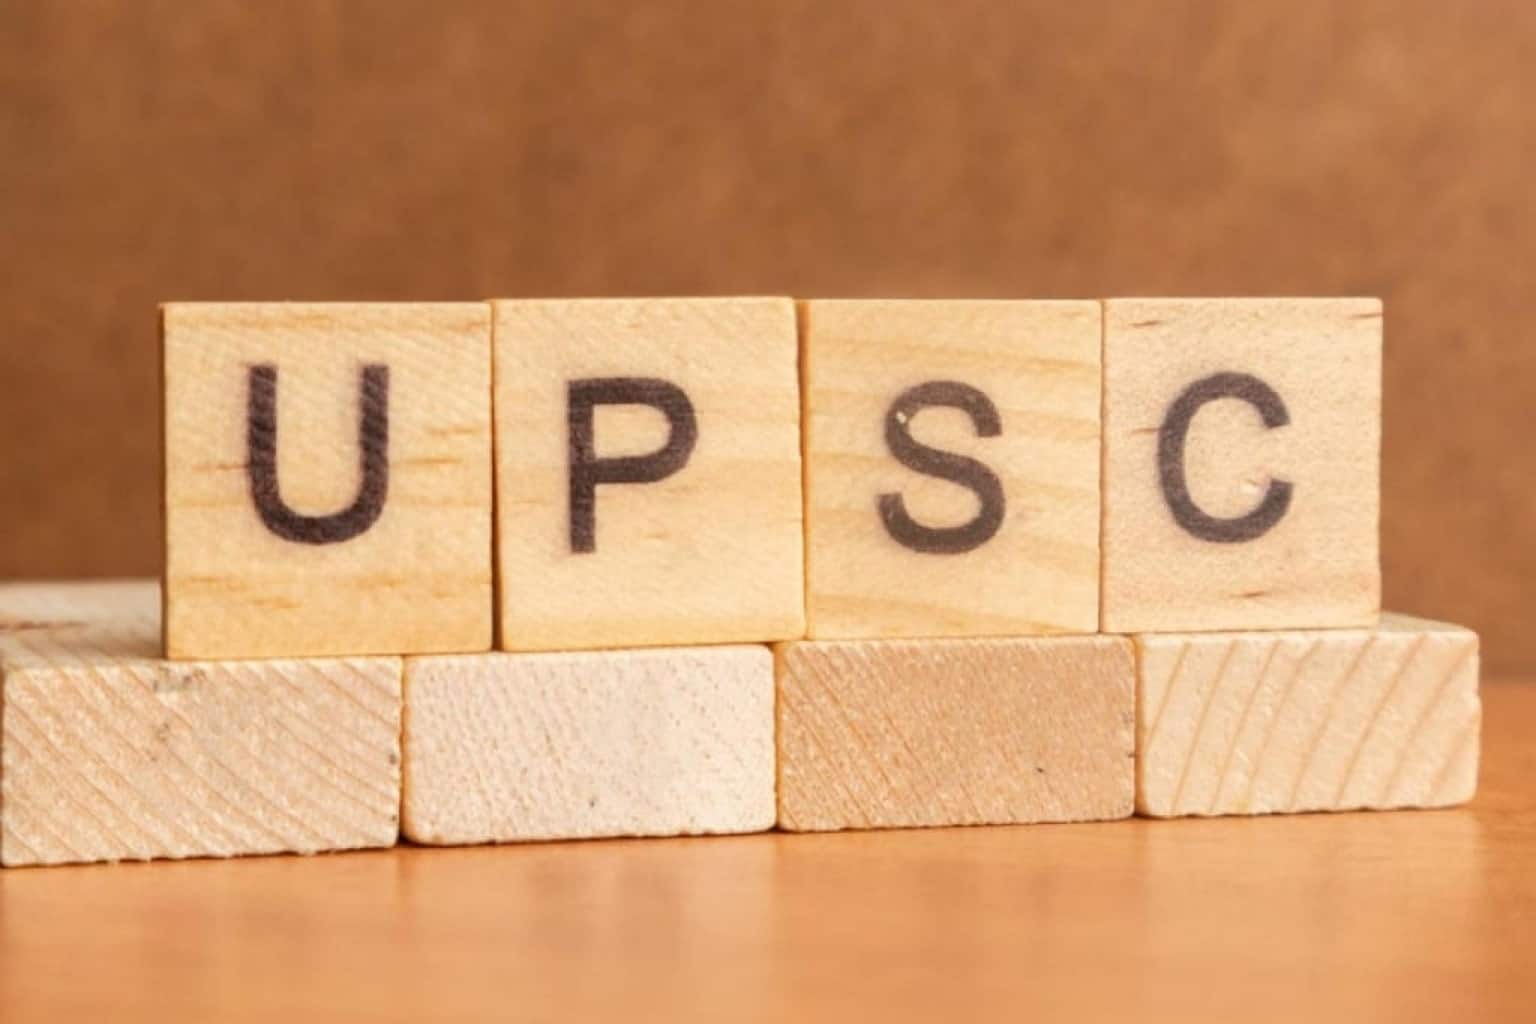 How to Prepare for UPSC Preliminary Examination 2021